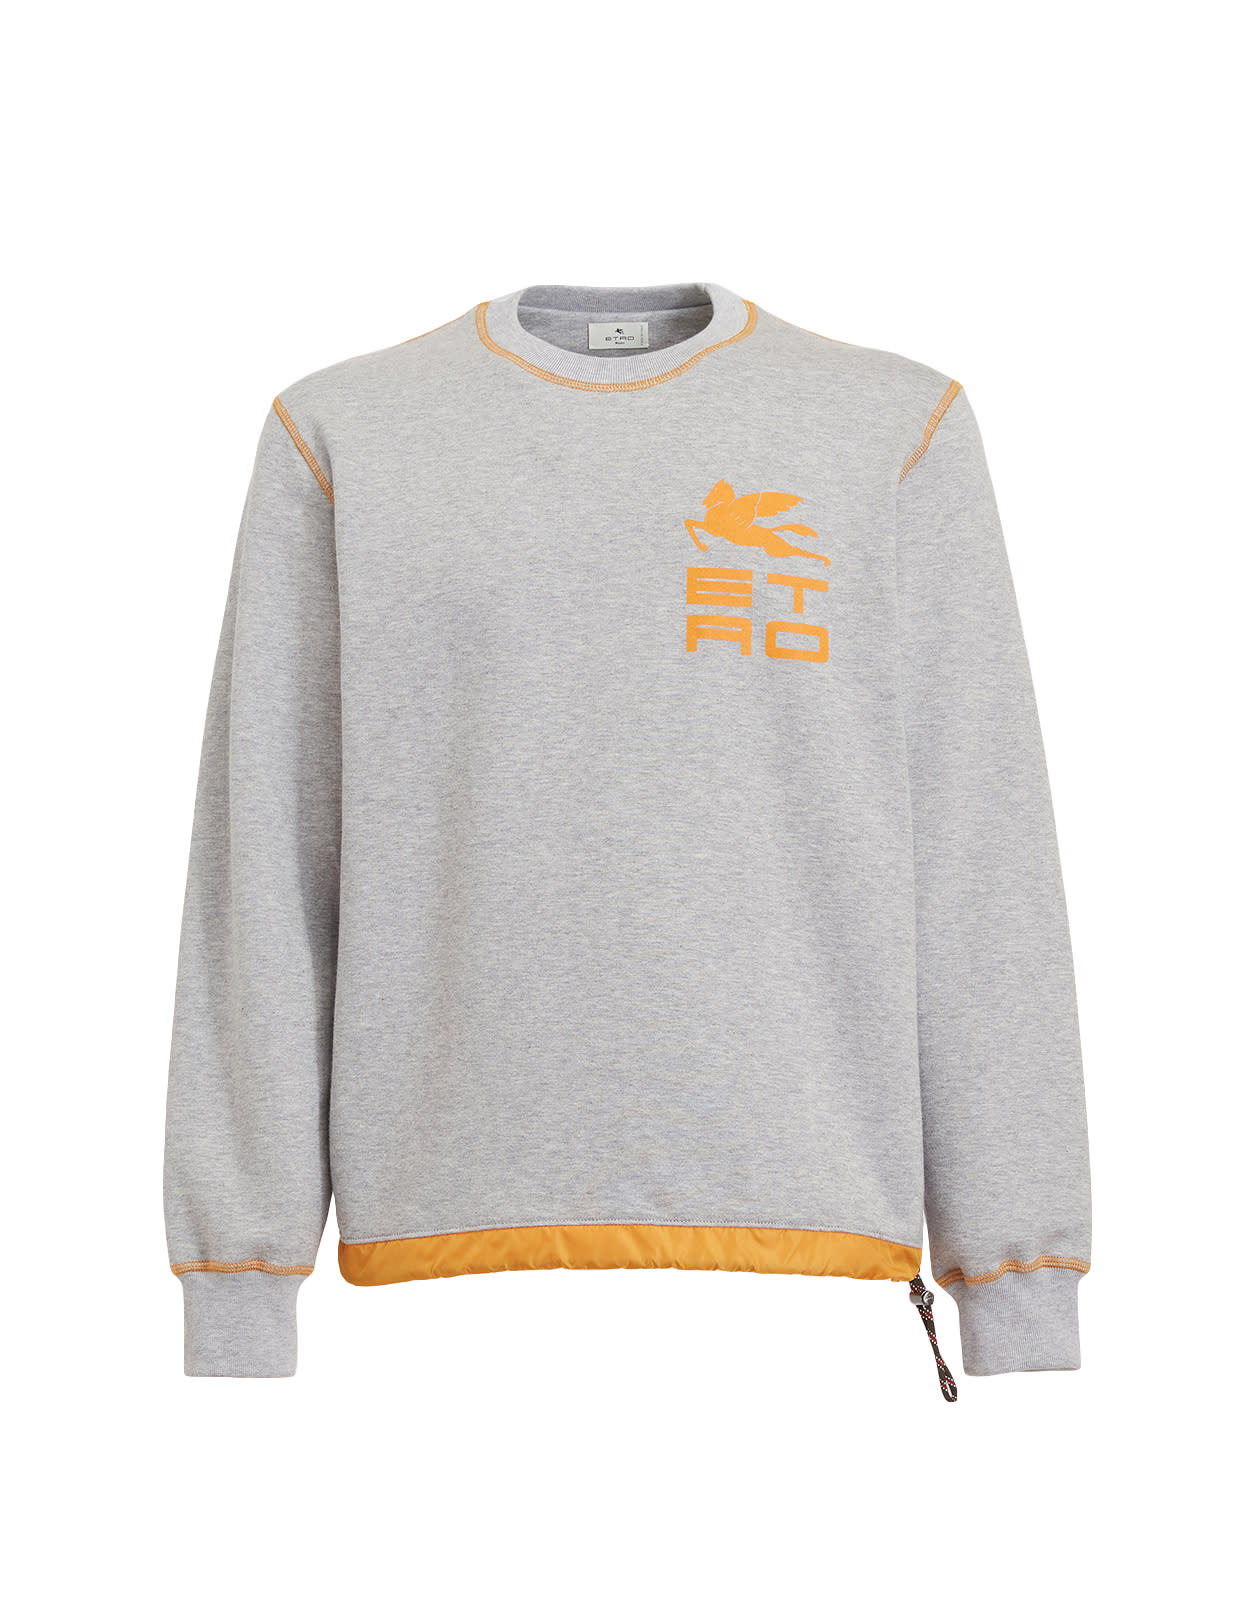 Man Grey And Orange Crew-neck Sweatshirt With Etro Cube Logo